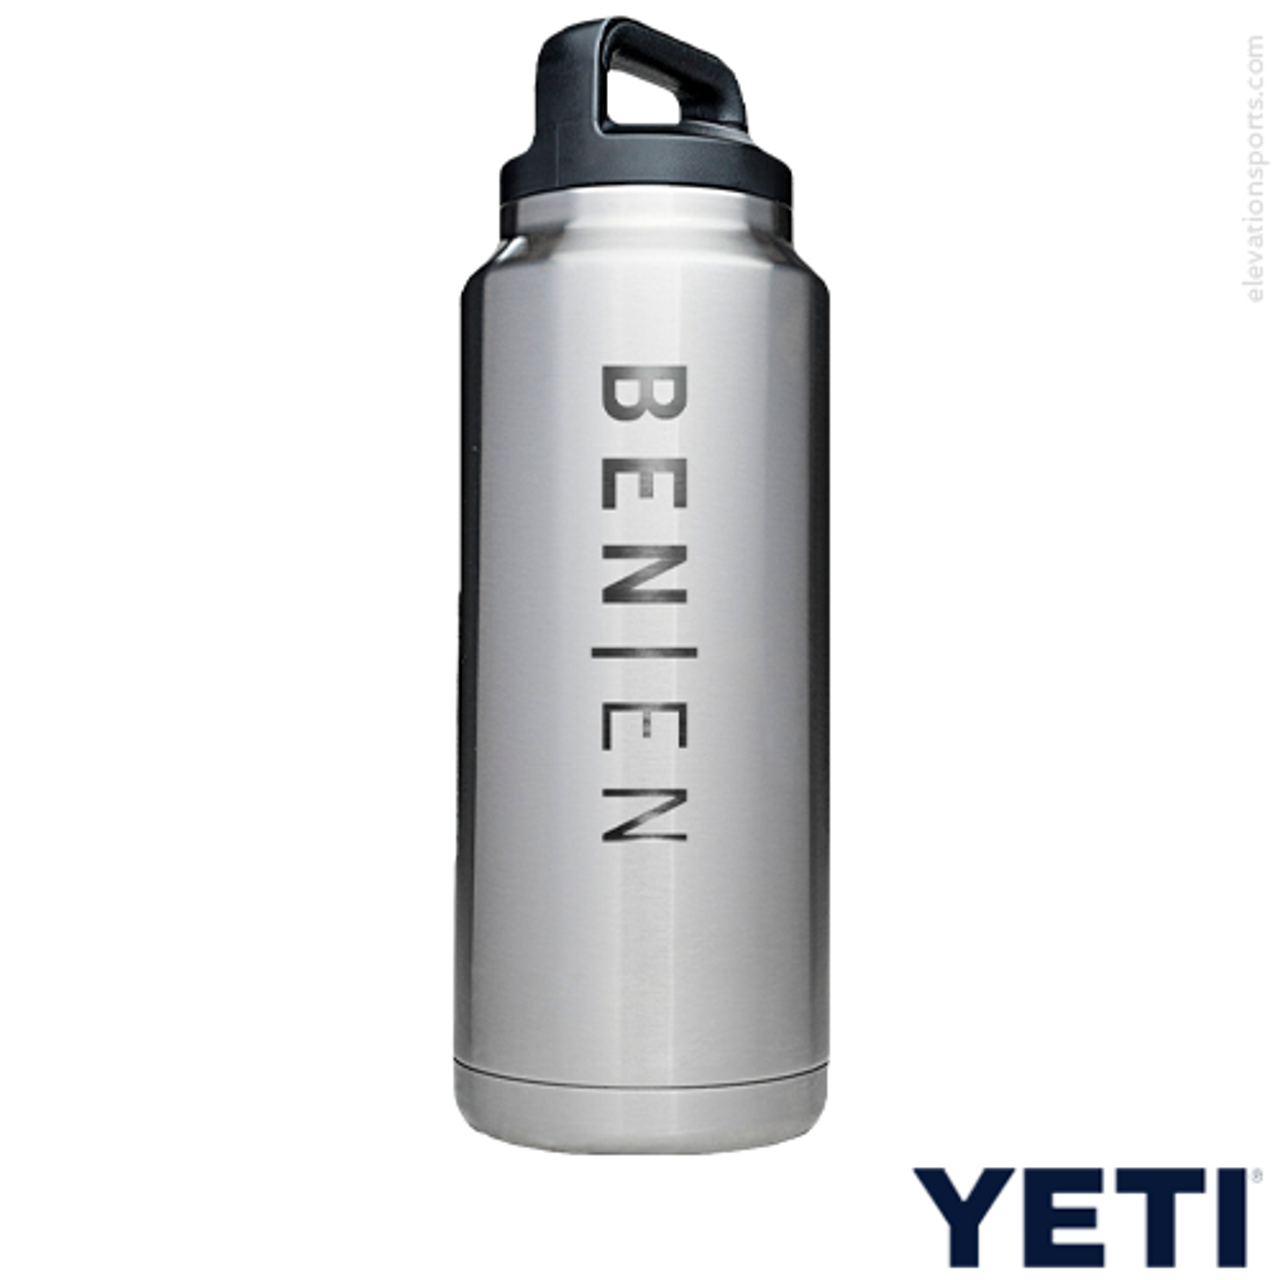 Personalized YETI Rambler 36 oz Bottle with Chug Cap - Stainless